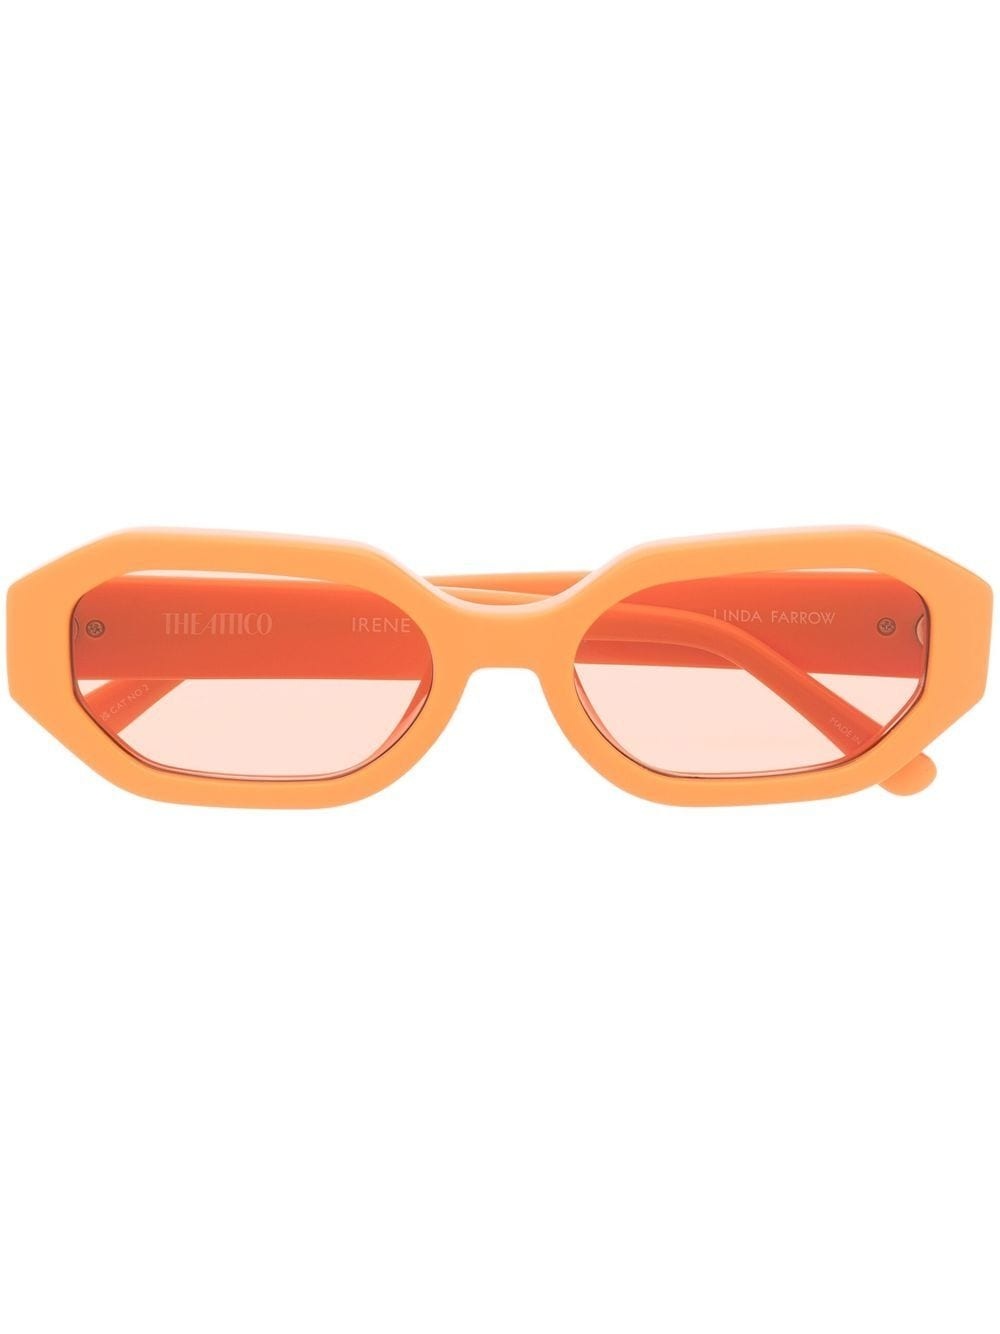 Irene rectangle sunglasses - 1